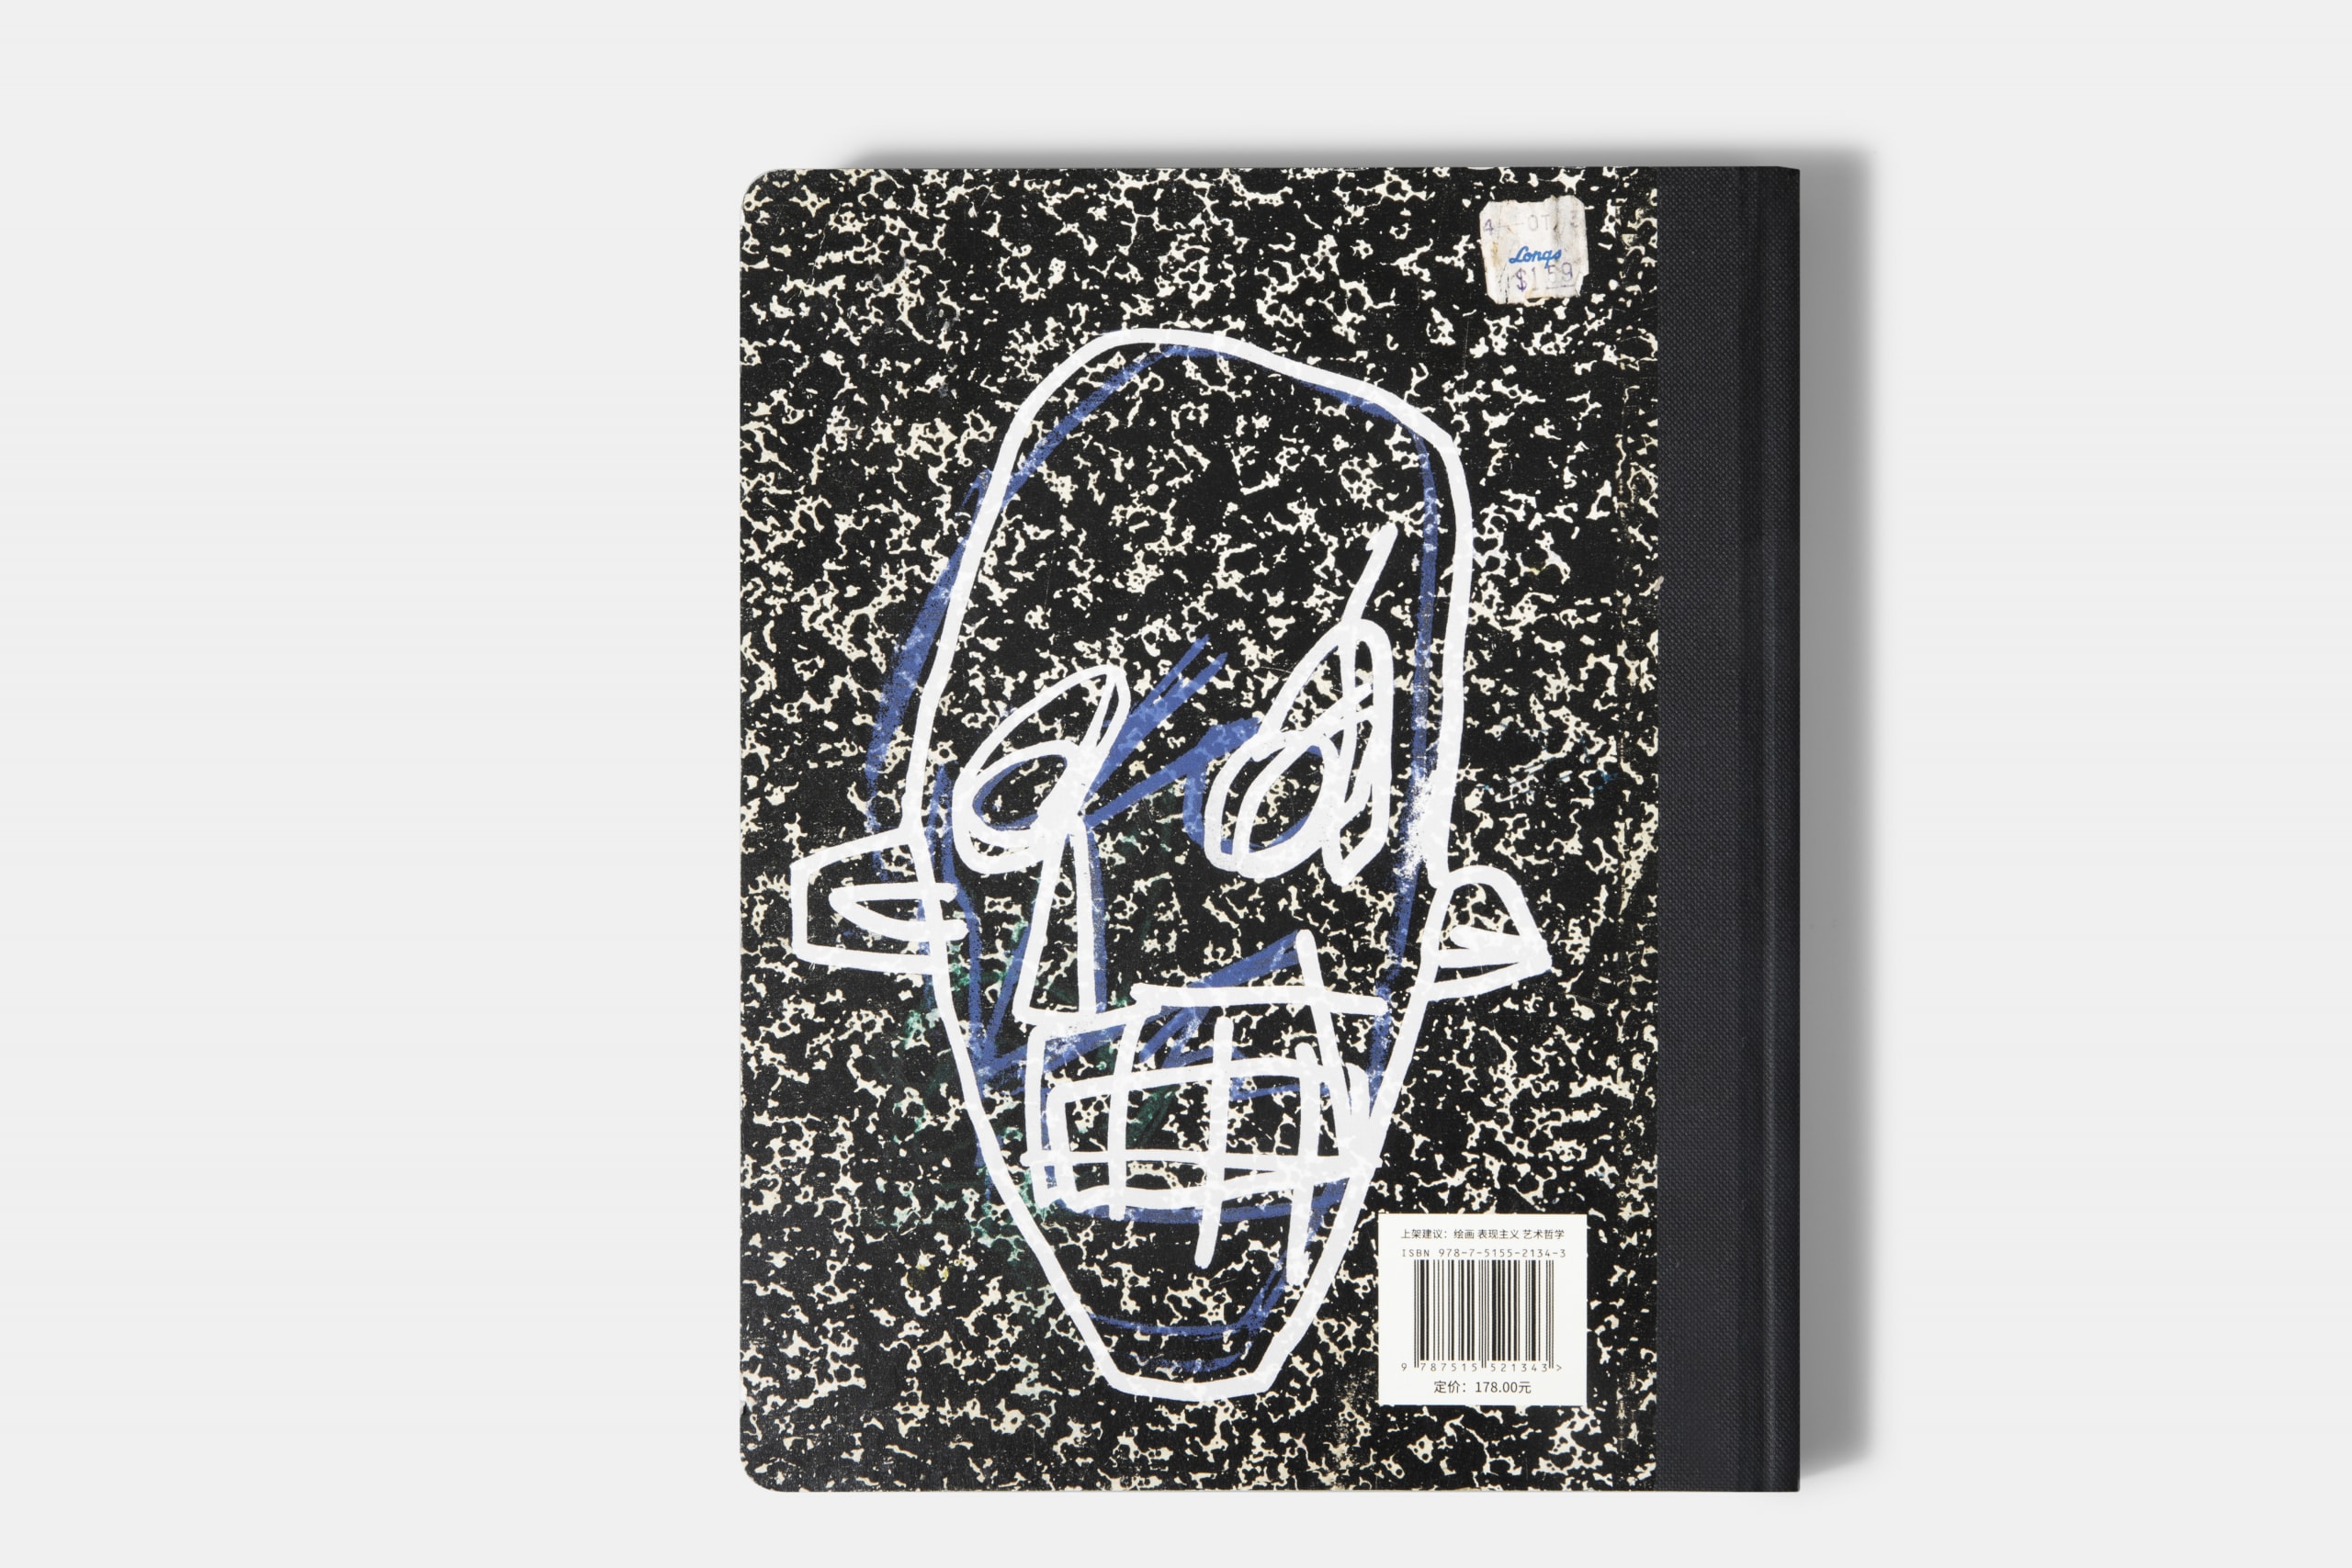 HOUSE OF INSPIRATION 携手 UCCA 尤伦斯当代艺术中心发布《Jean-Michel Basquiat 的笔记本》